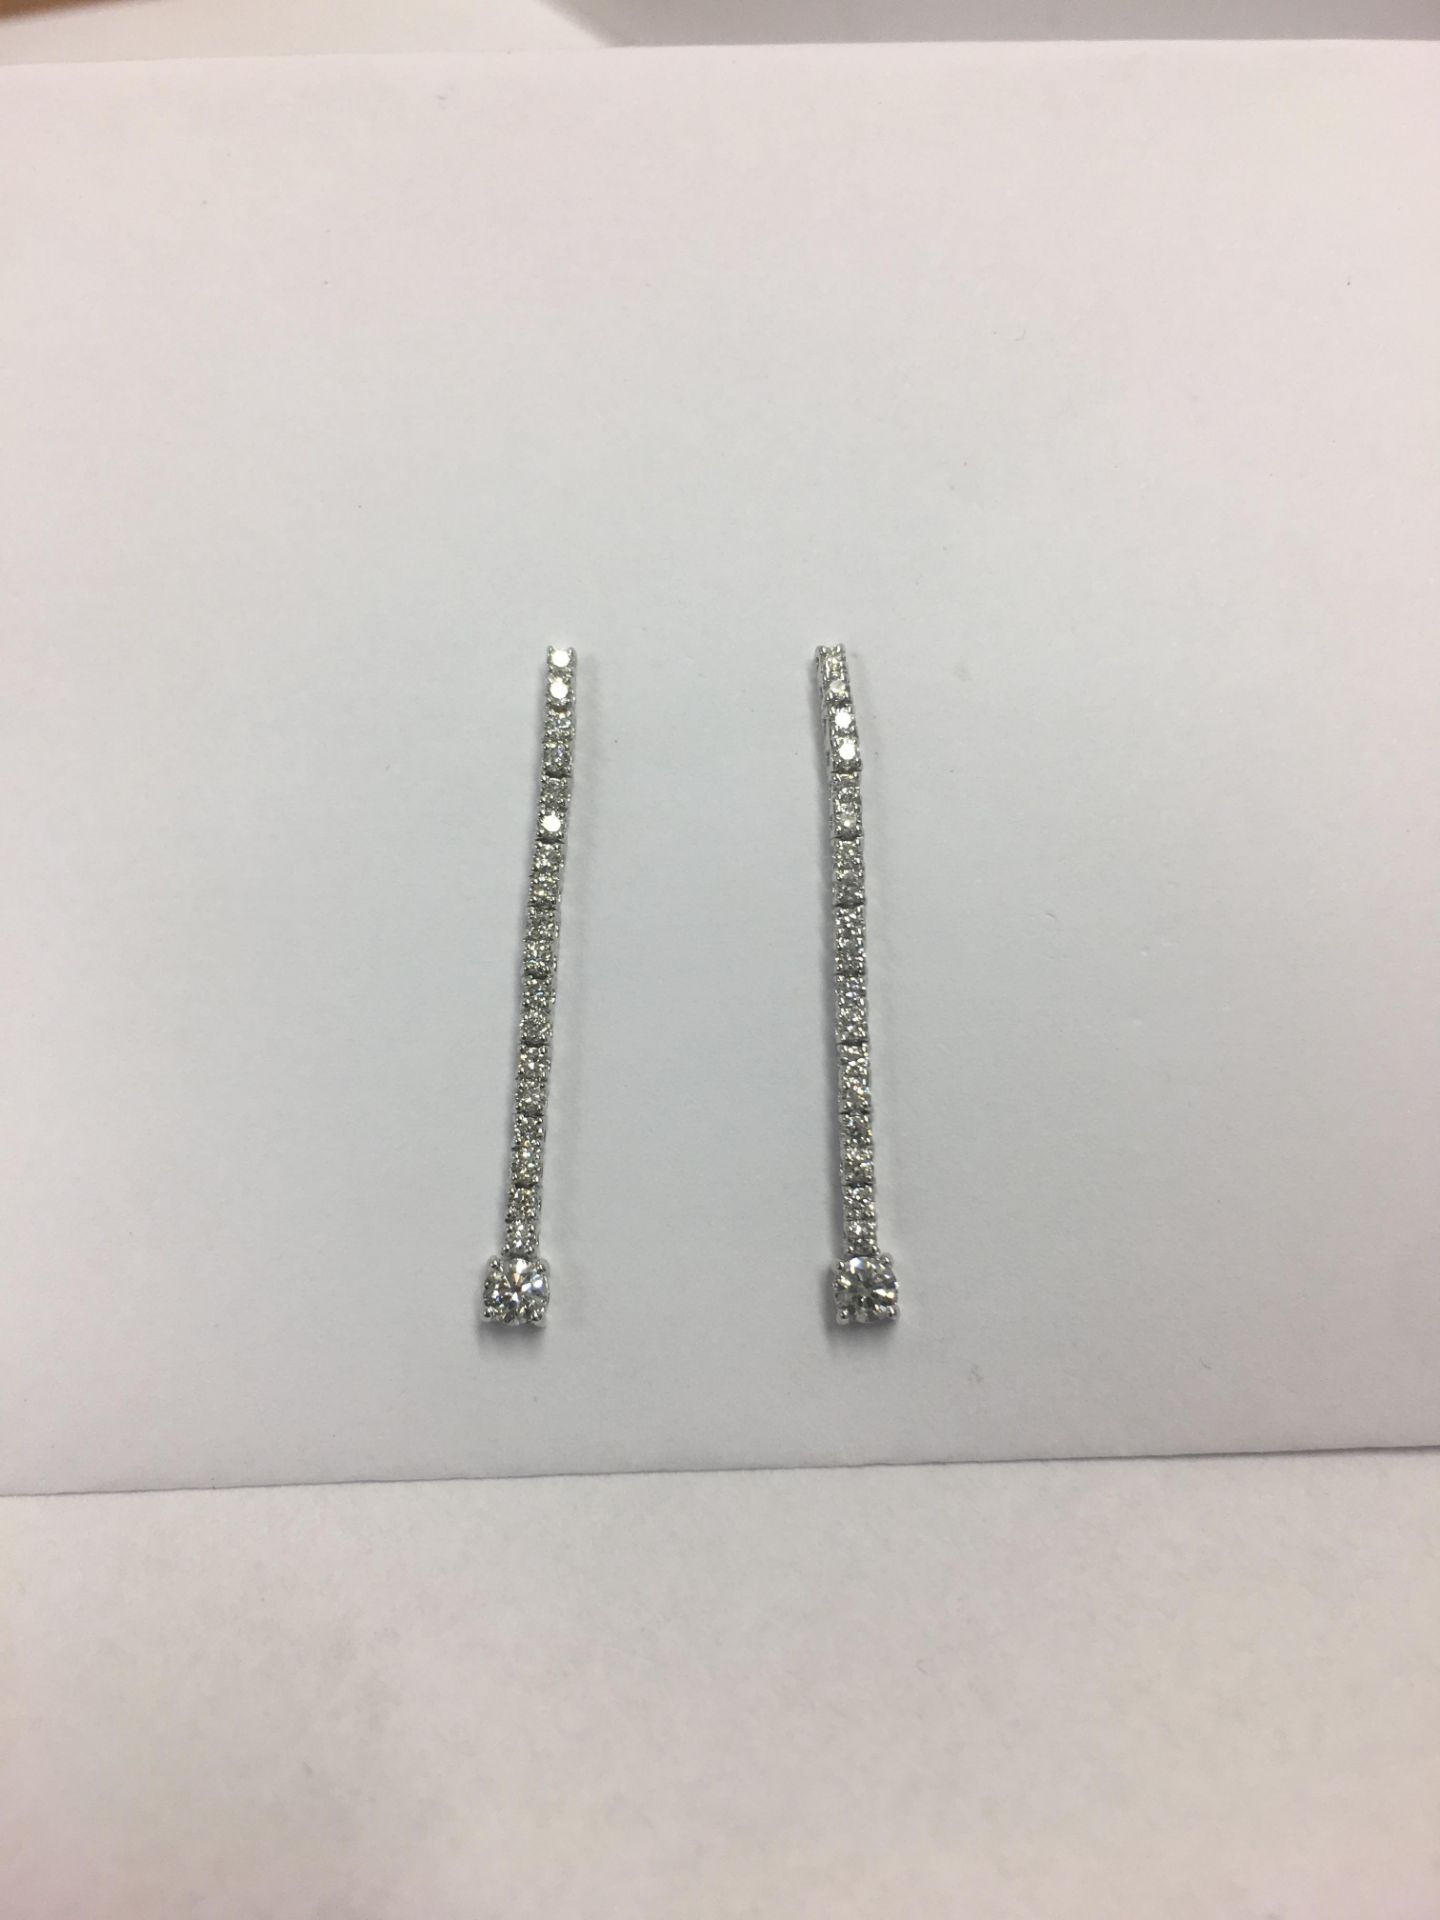 0.60ct diamond drop earrings set in 18ct white gold. Claw setting. Brilliant cut diamonds